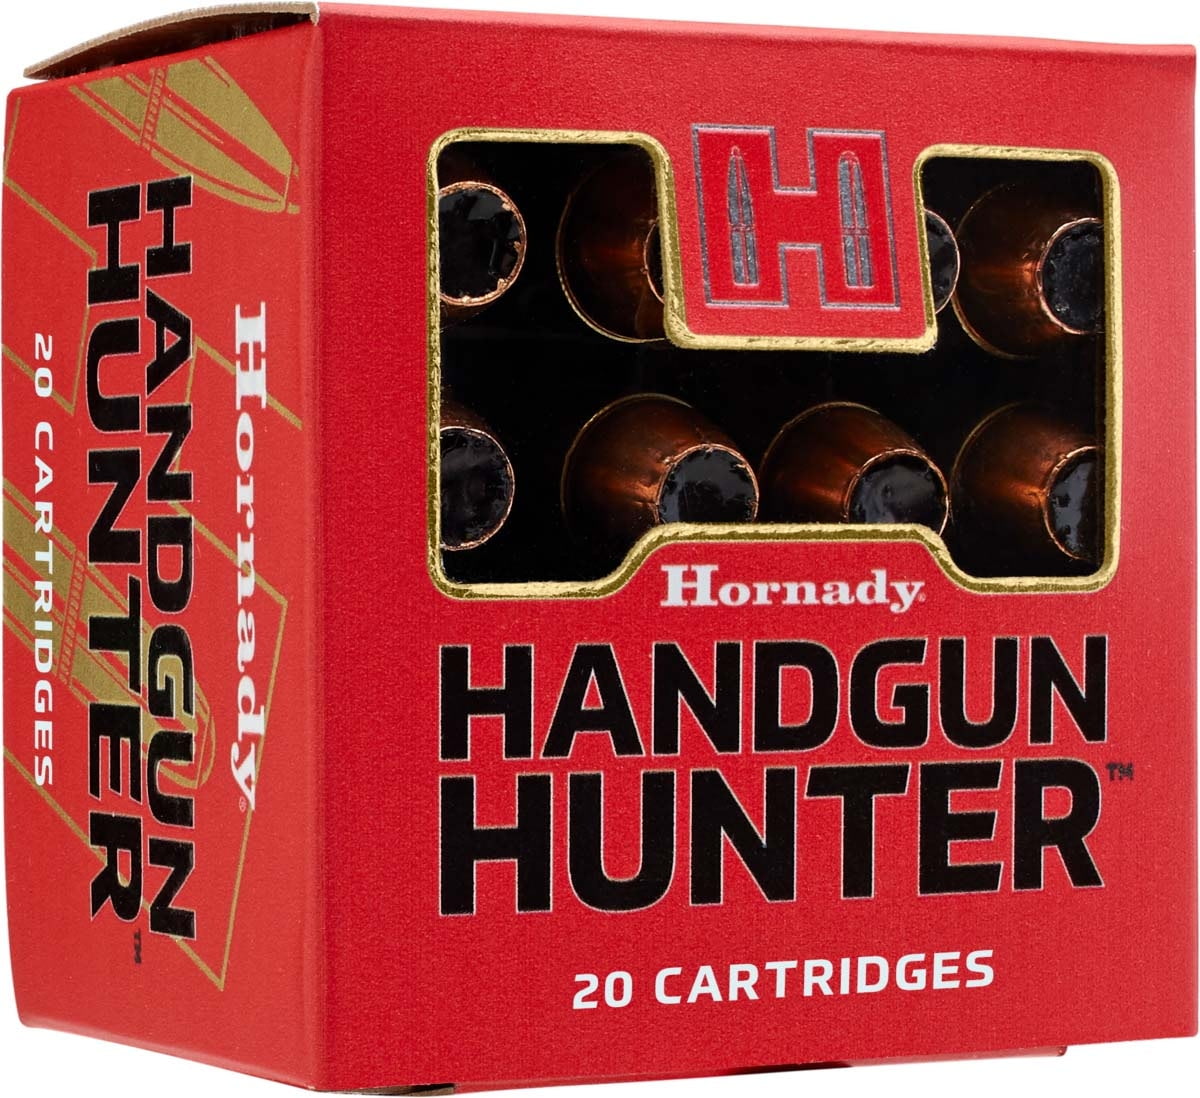 Hornady Handgun Hunter 10mm Auto 135 grain Flex Tip Brass Cased Centerfire Pistol Ammunition